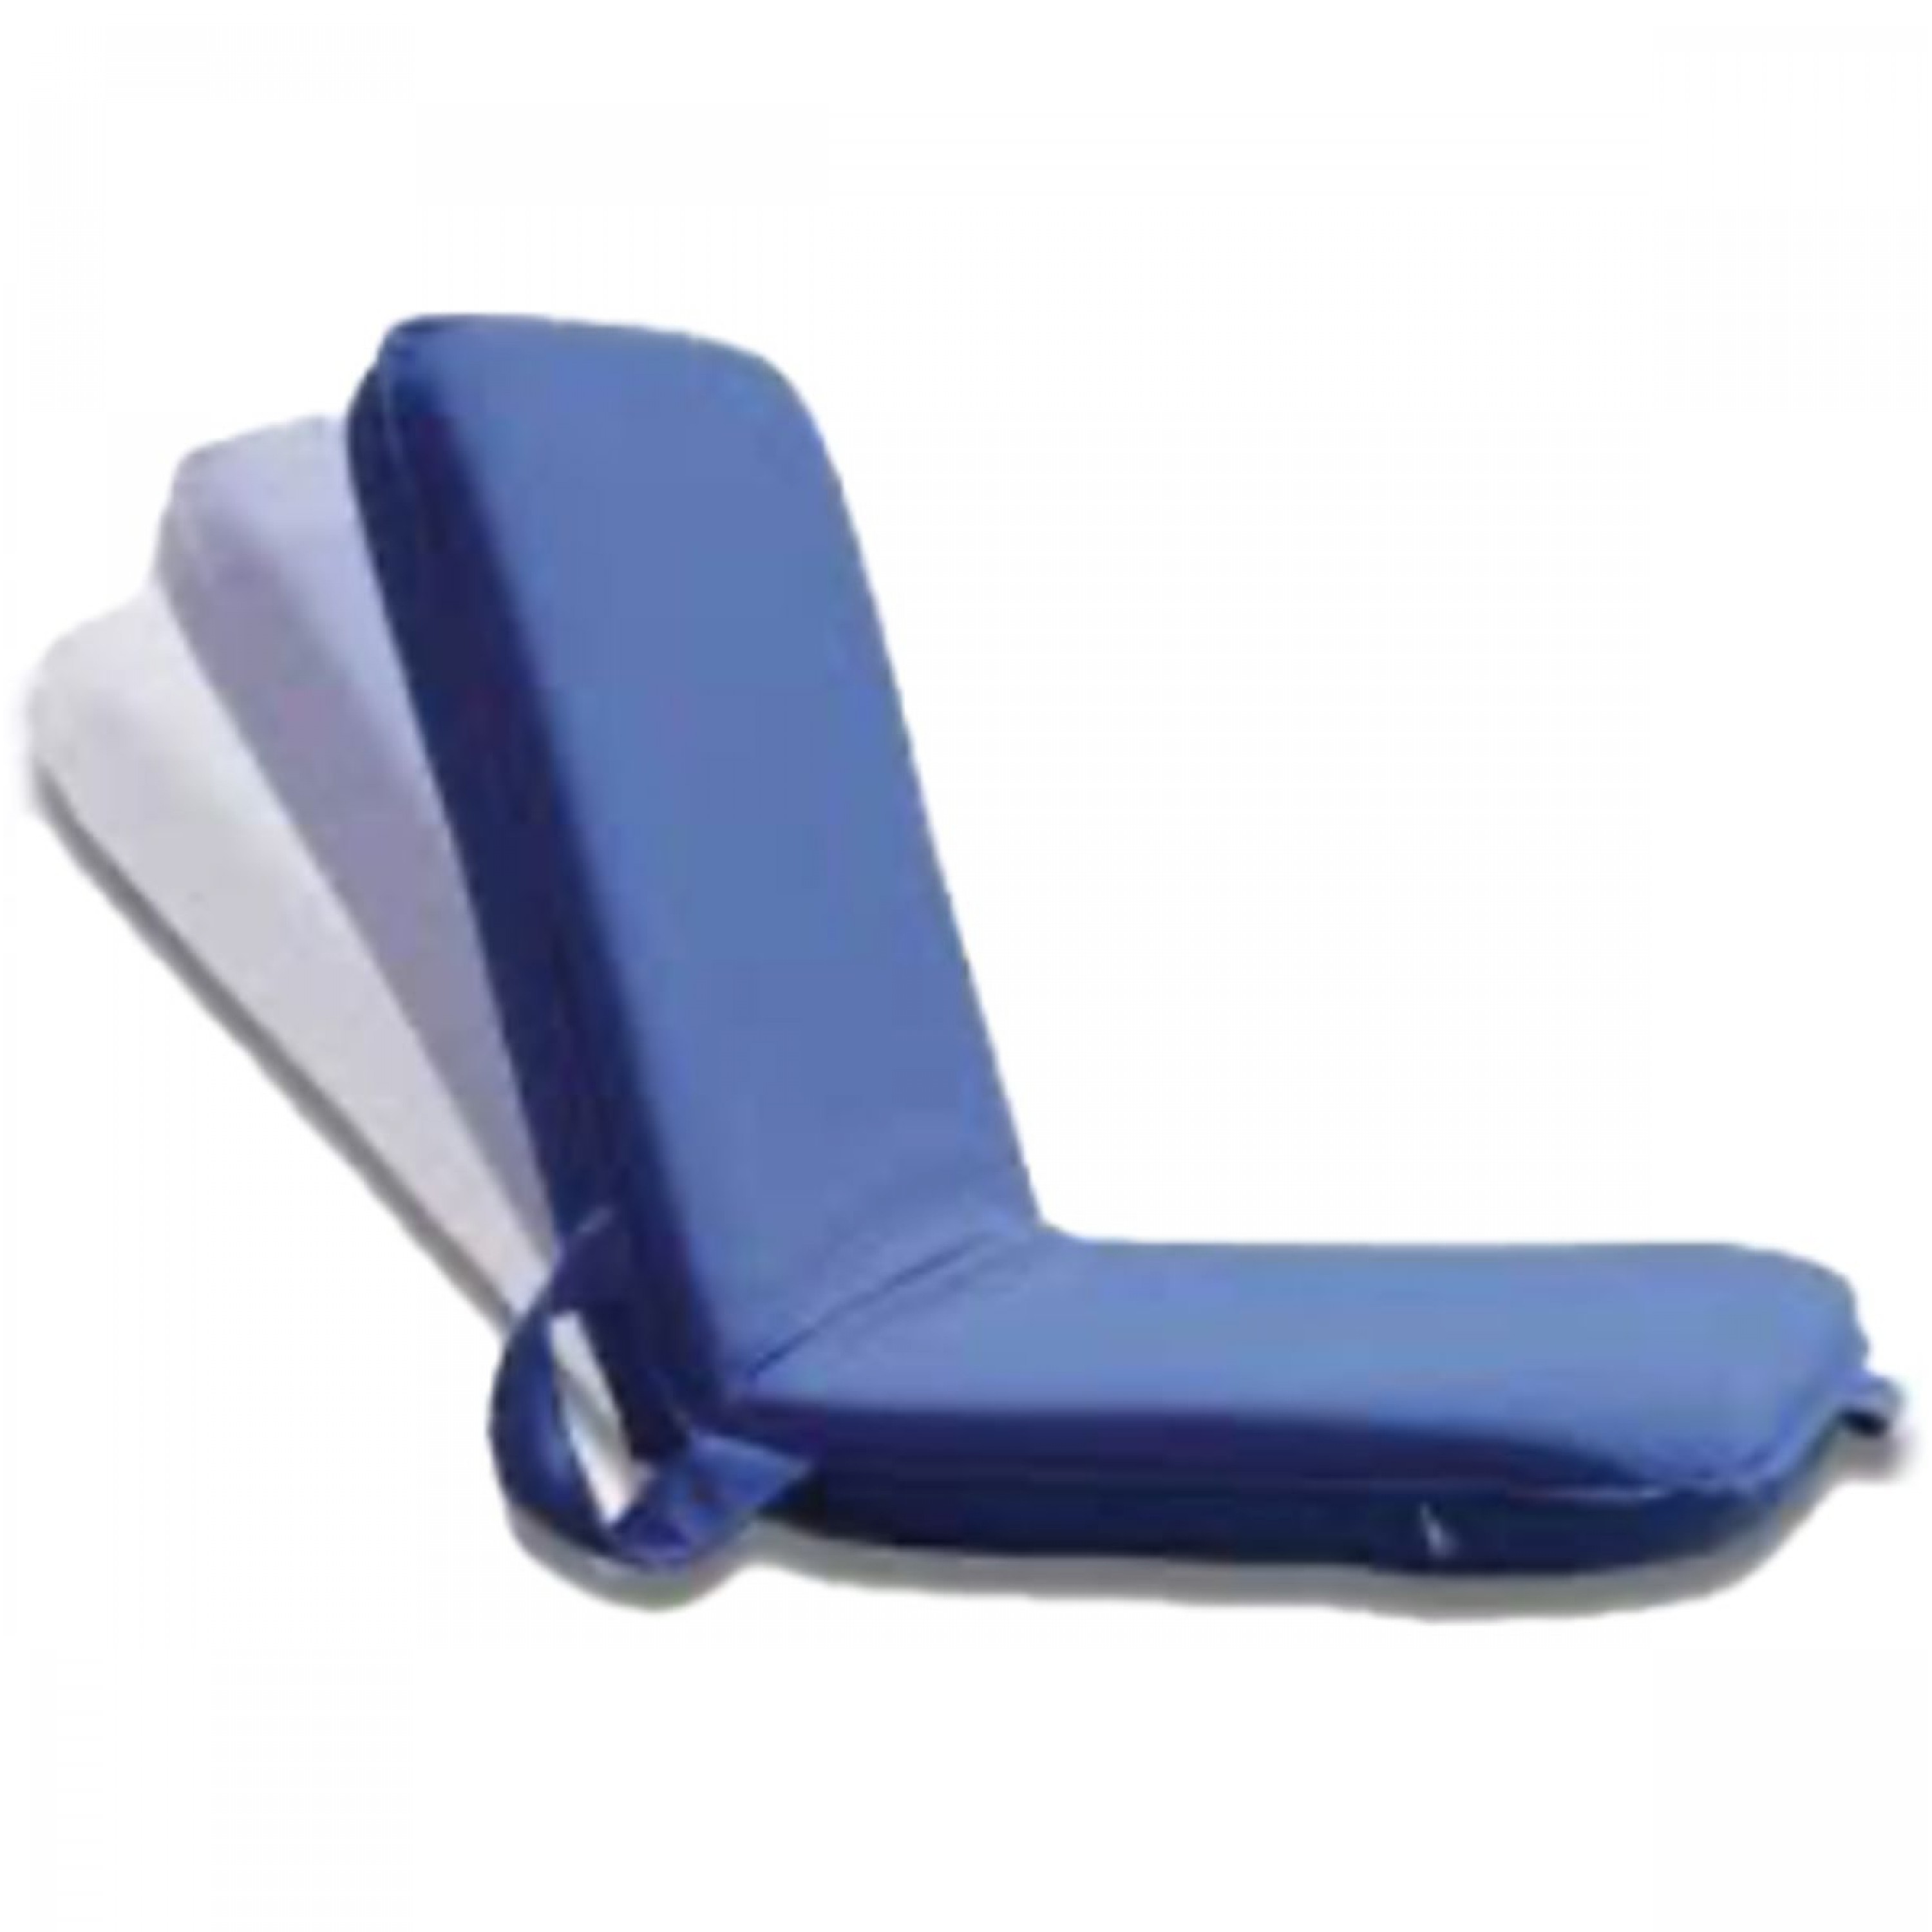 BOAT SEAT FOLDING STO-AWAY NAVY BLUE